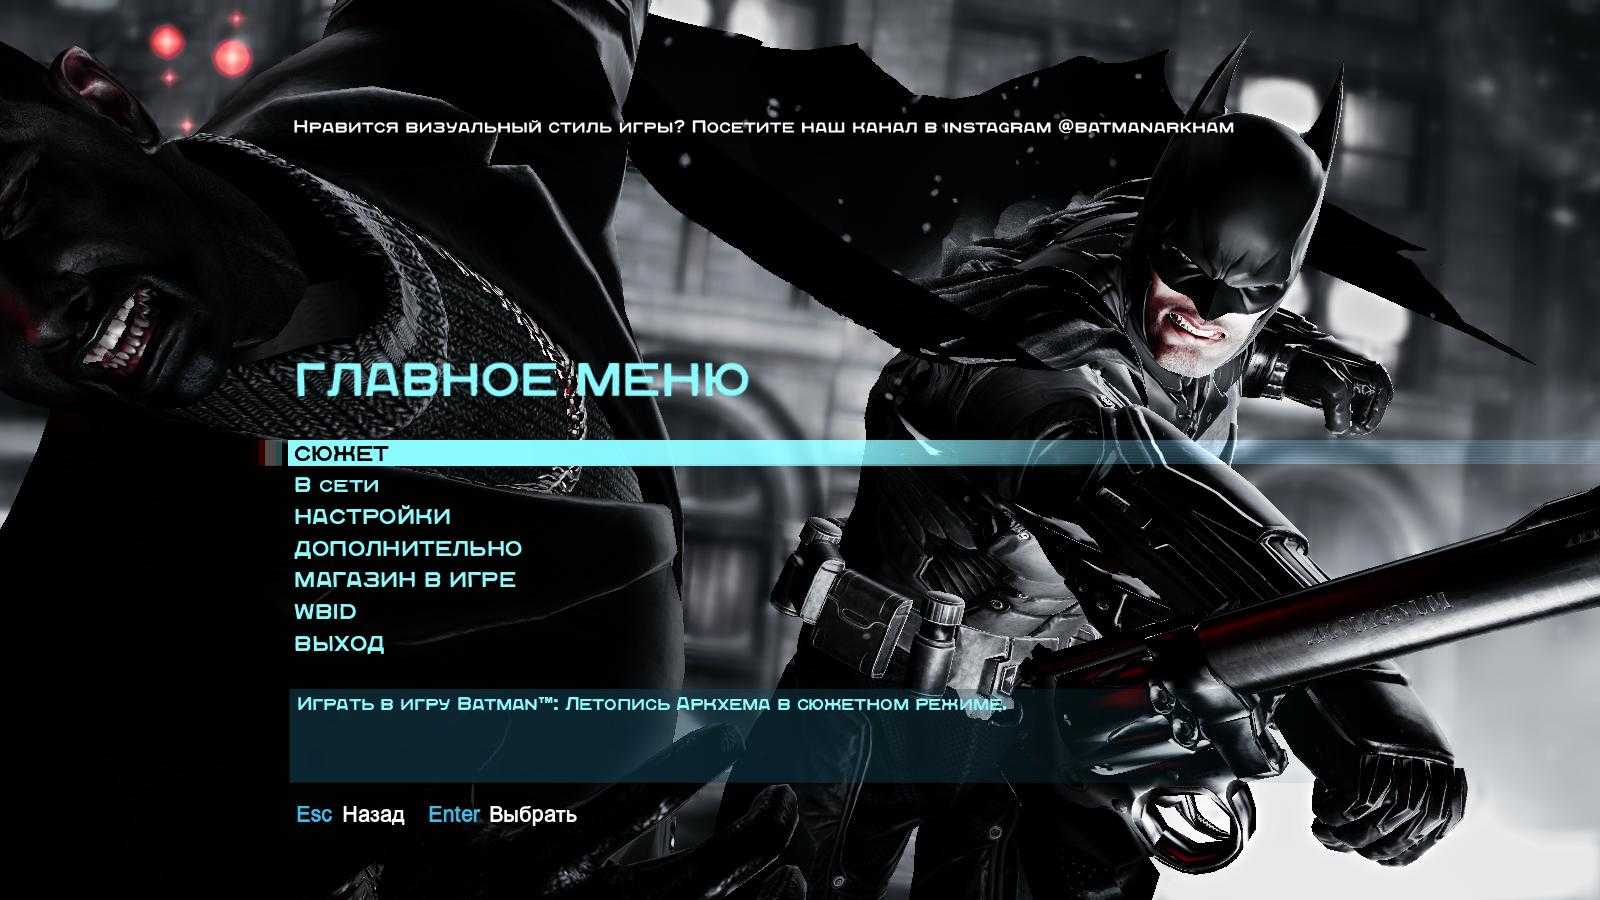 Бэтмен аркхем системные требования. Batman: Arkham Origins (2013). Игра Бэтмен 2013. Бэтмен летопись Аркхема ps3. Бэтмен Аркхем ориджин.